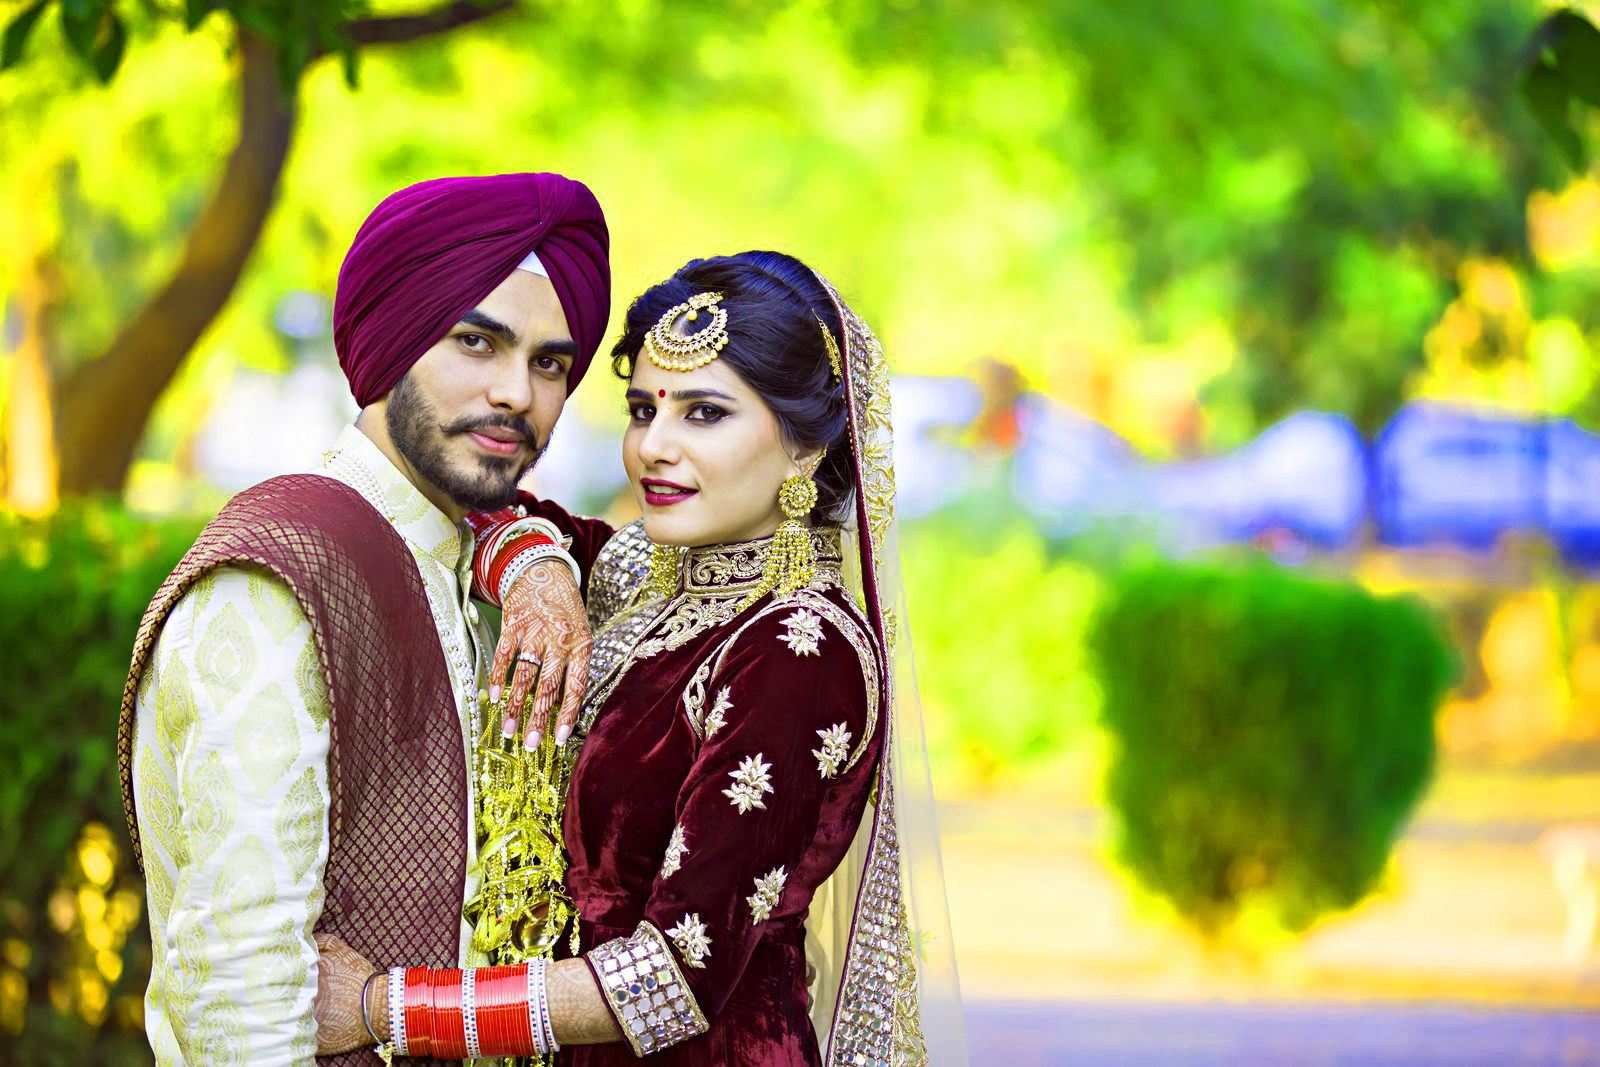 Sweet Cute Punjabi Wedding Lover Love Couple Wallpaper Wedding Photography 45930 Hd Wallpaper Backgrounds Download Punjabi couples new hd pics (1 viewer). sweet cute punjabi wedding lover love